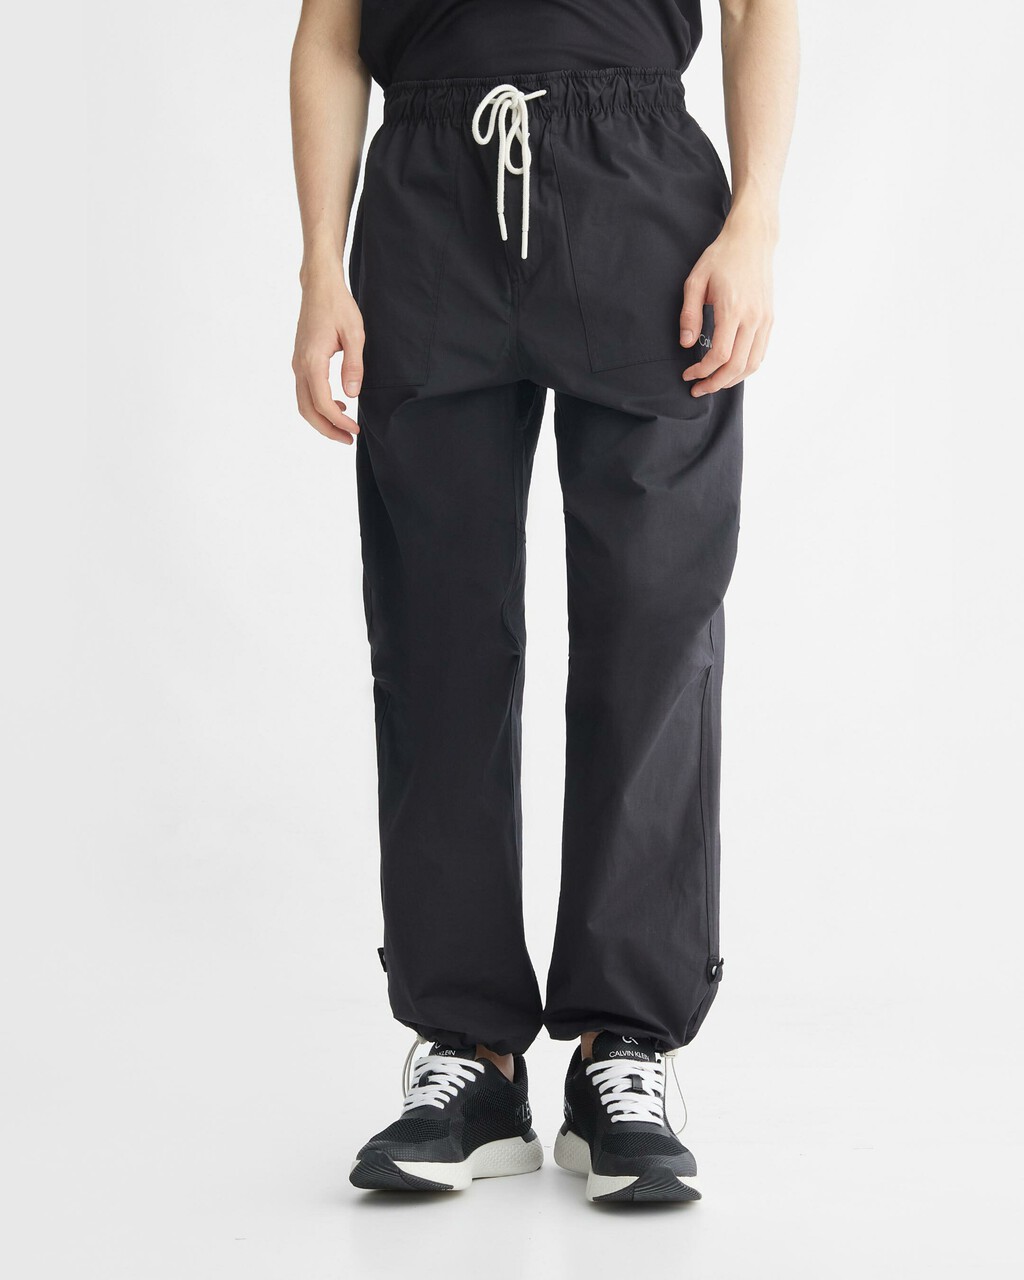 CK Athetlic Oversized Sweatpants | black | Calvin Klein Hong Kong